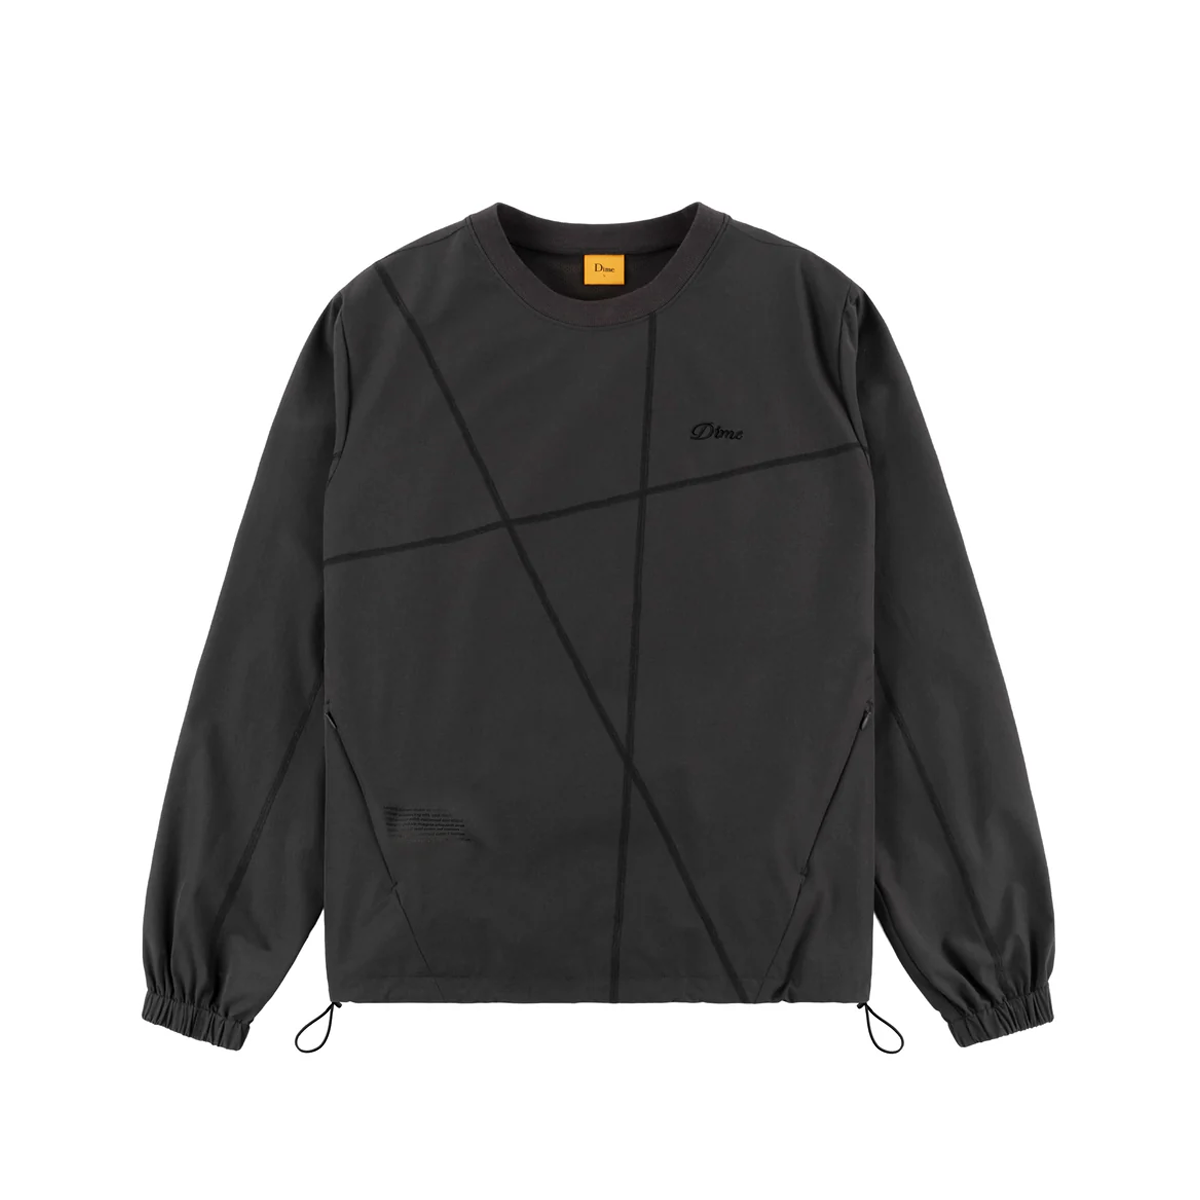 Dime Tech Crewneck Sweatshirt - Charcoal